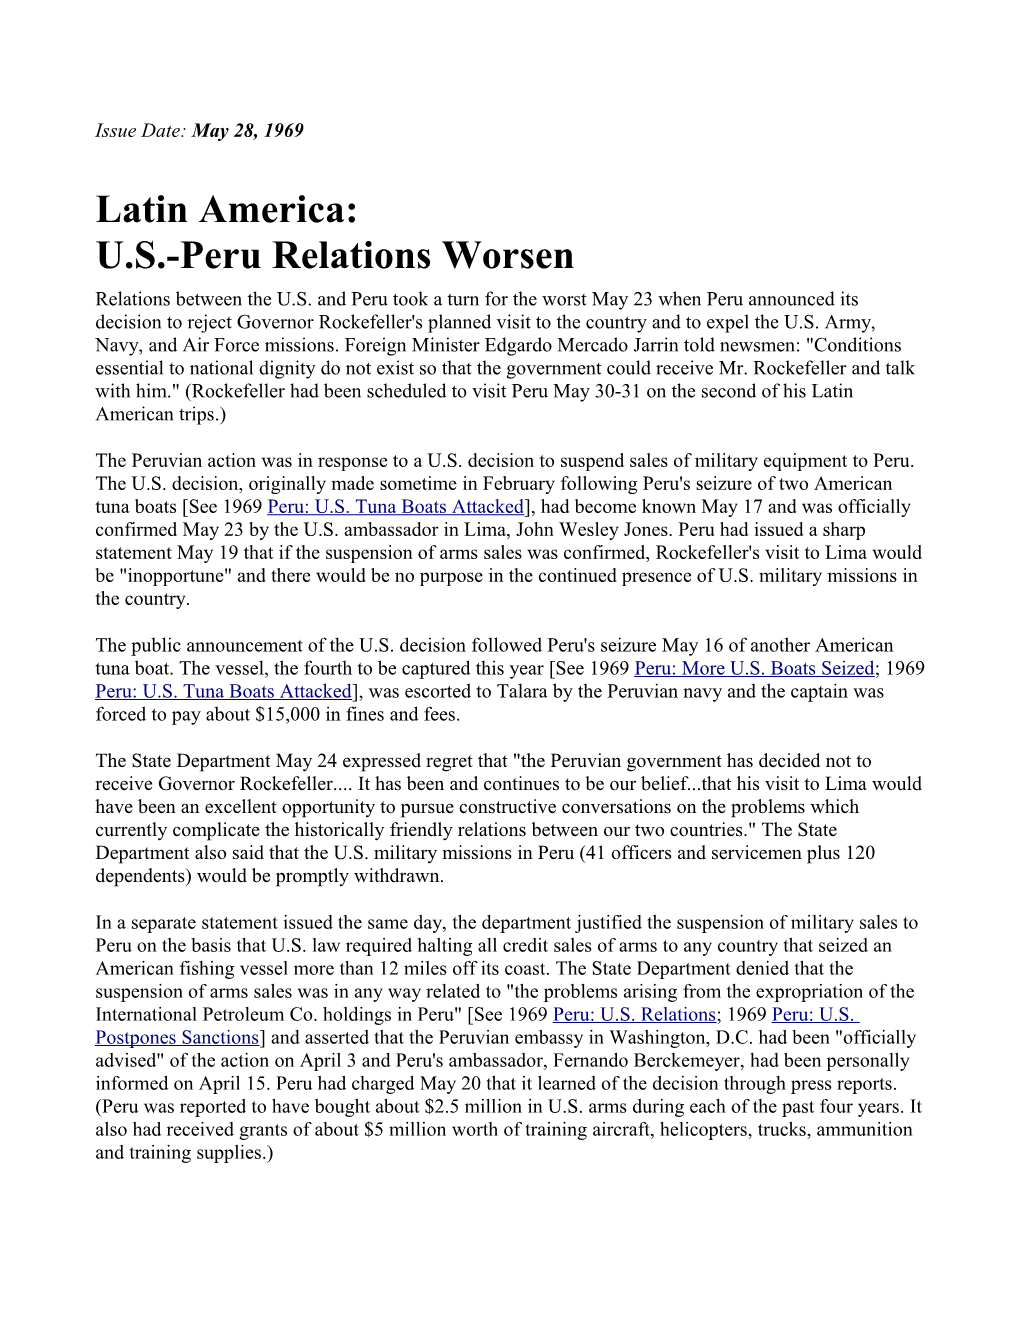 Latin America:U.S.-Peru Relations Worsen